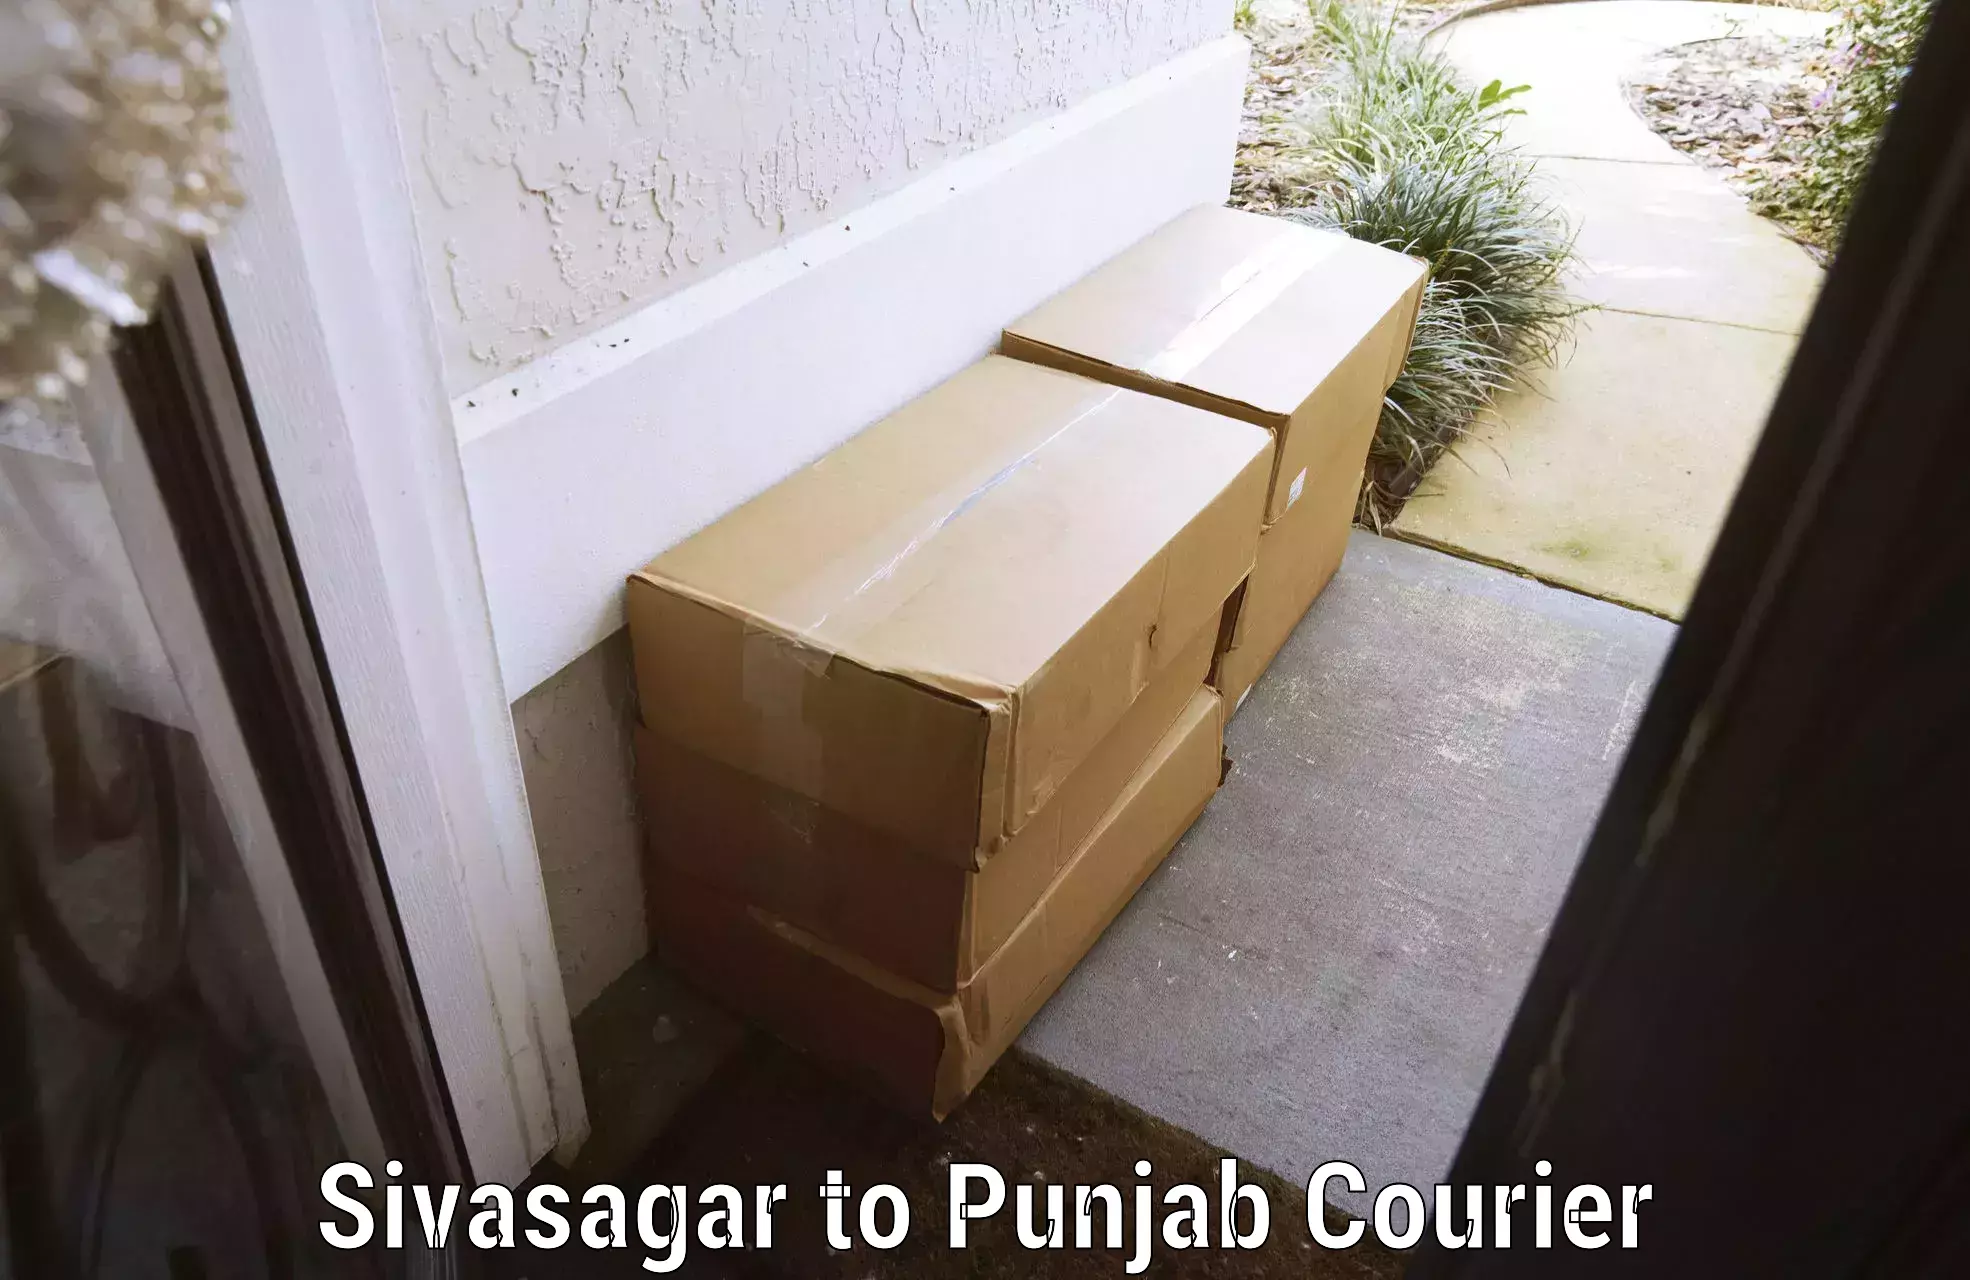 Baggage shipping experts Sivasagar to Punjab